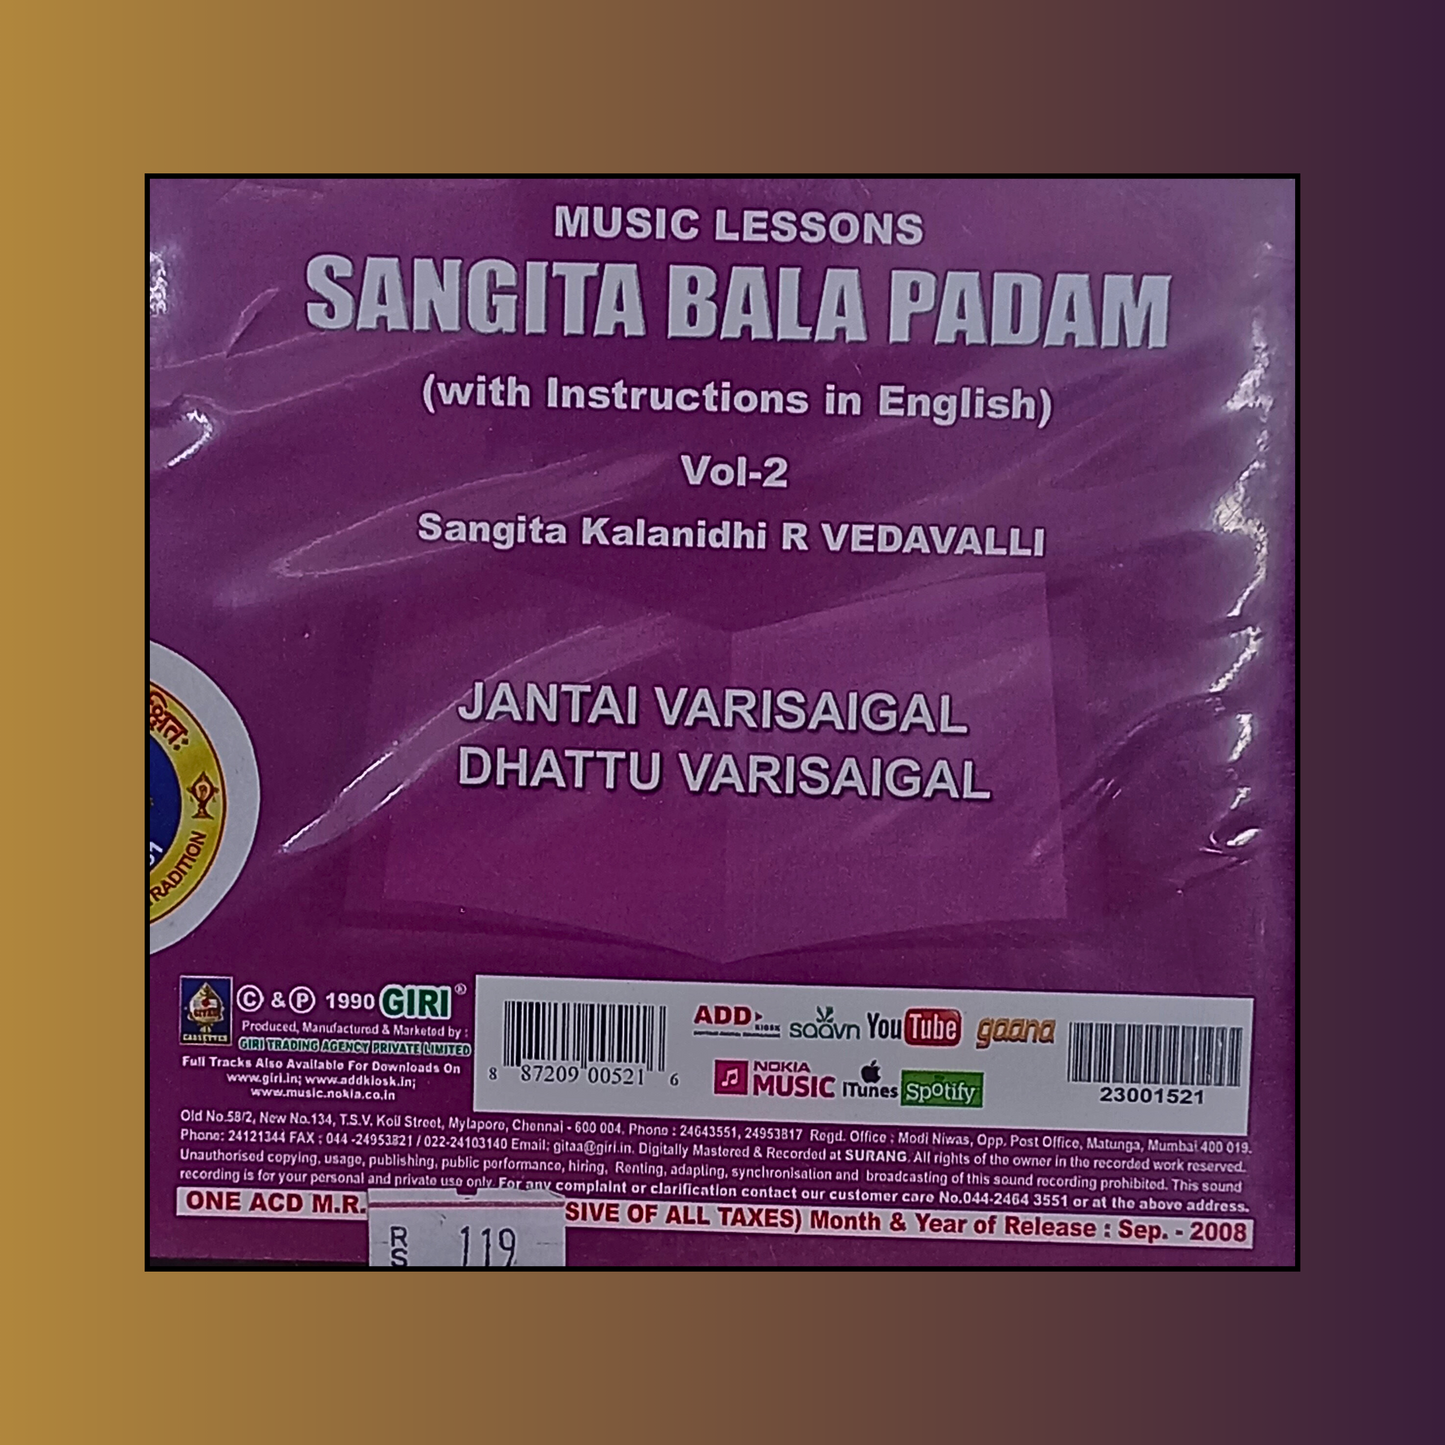 Sangita Bala Padam Vol 2 English - CD Player